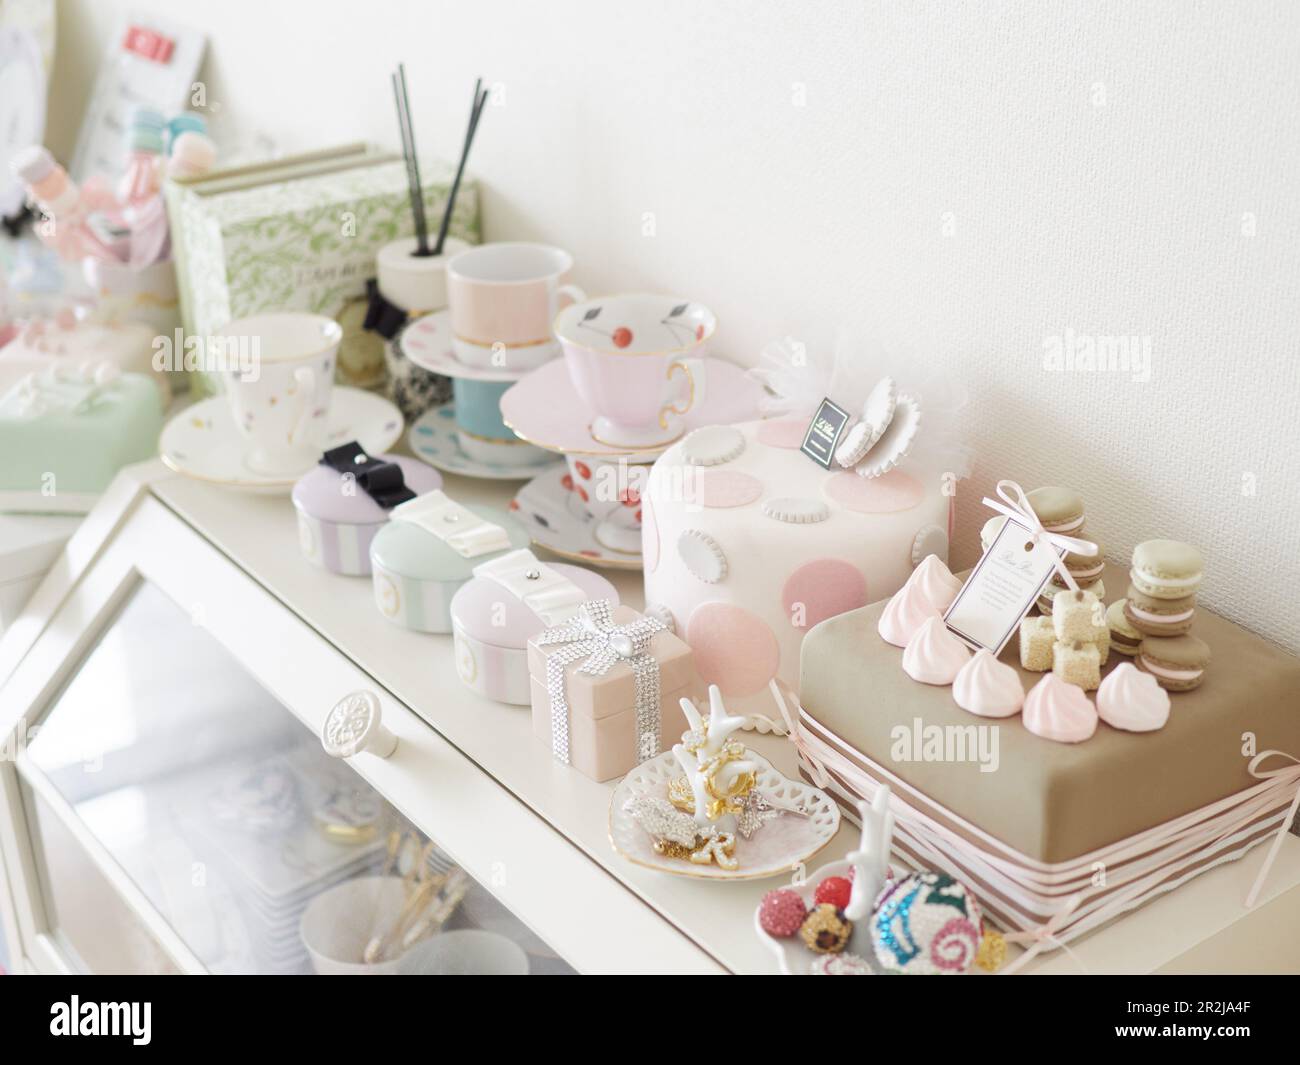 Shelves adorned with handmade sundries Stock Photo